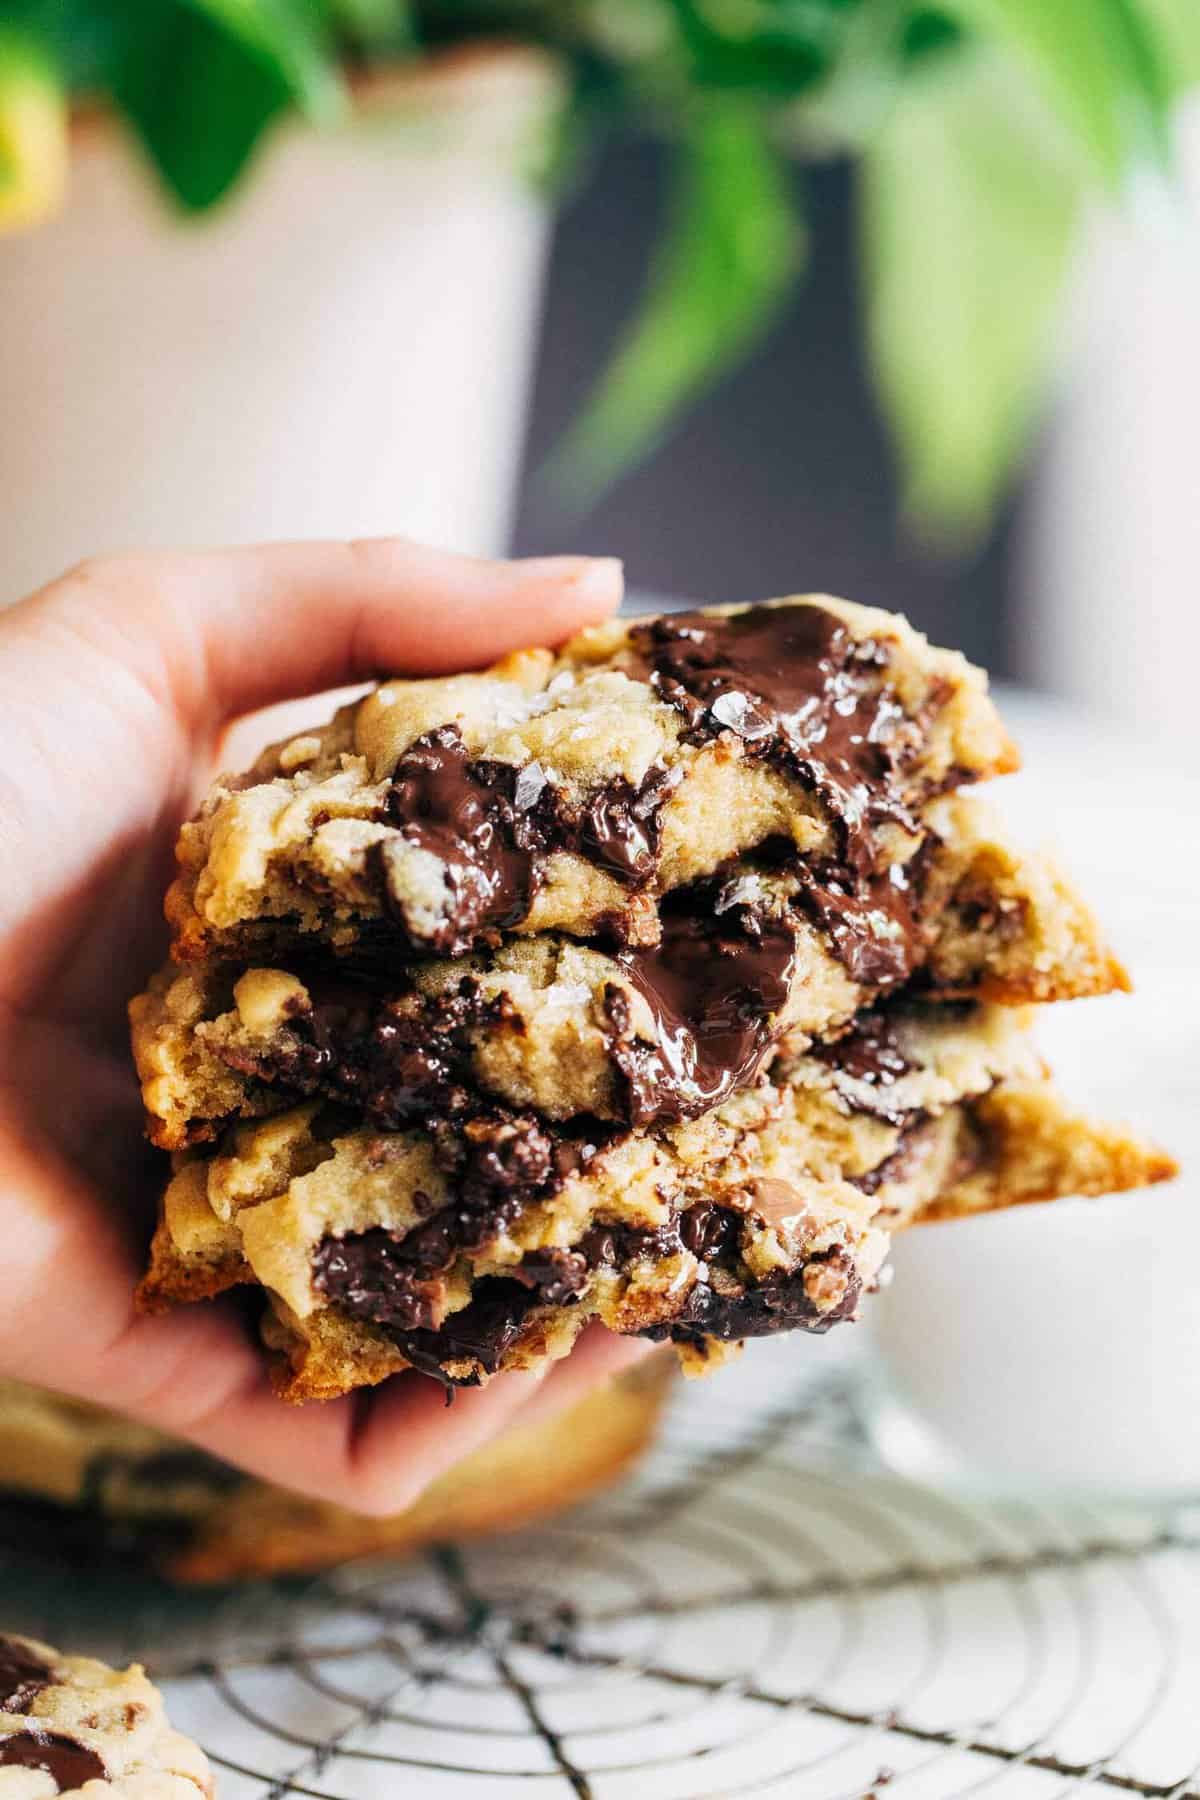 https://butternutbakeryblog.com/wp-content/uploads/2021/05/bakery-style-chocolate-chip-cookies.jpg